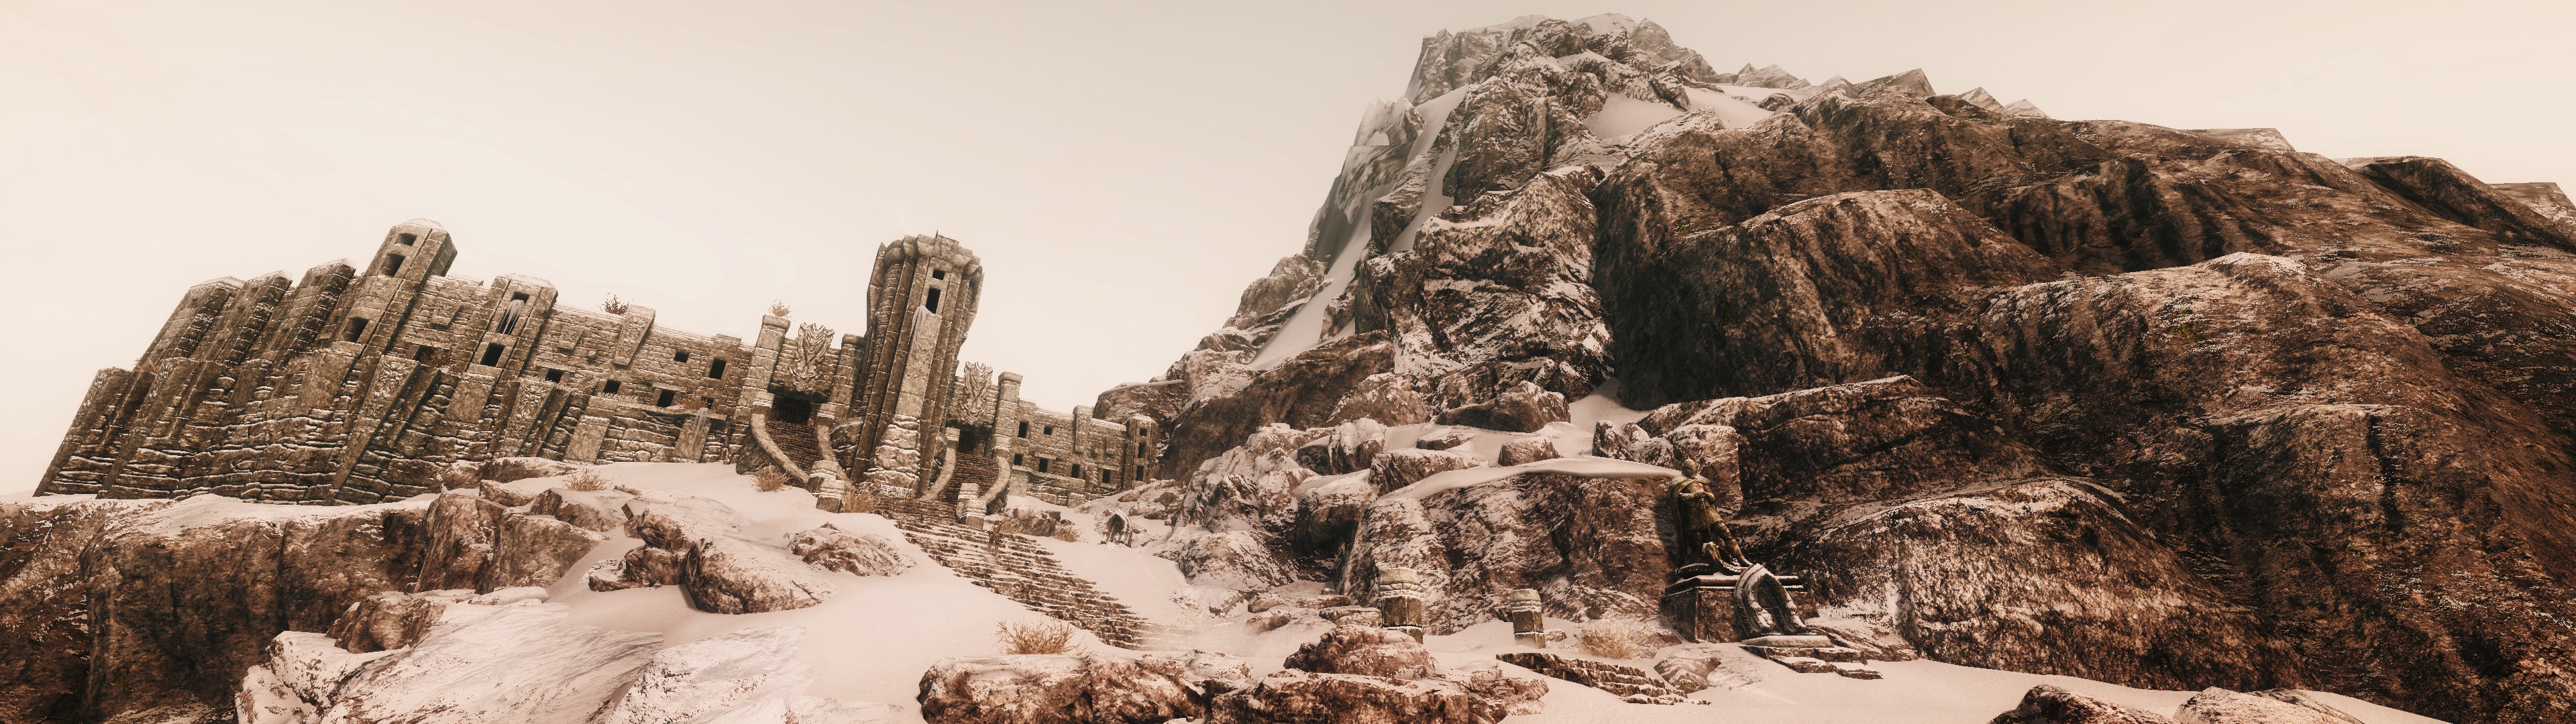 General 3840x1080 The Elder Scrolls V: Skyrim multiple display landscape snow mountains RPG video games PC gaming screen shot